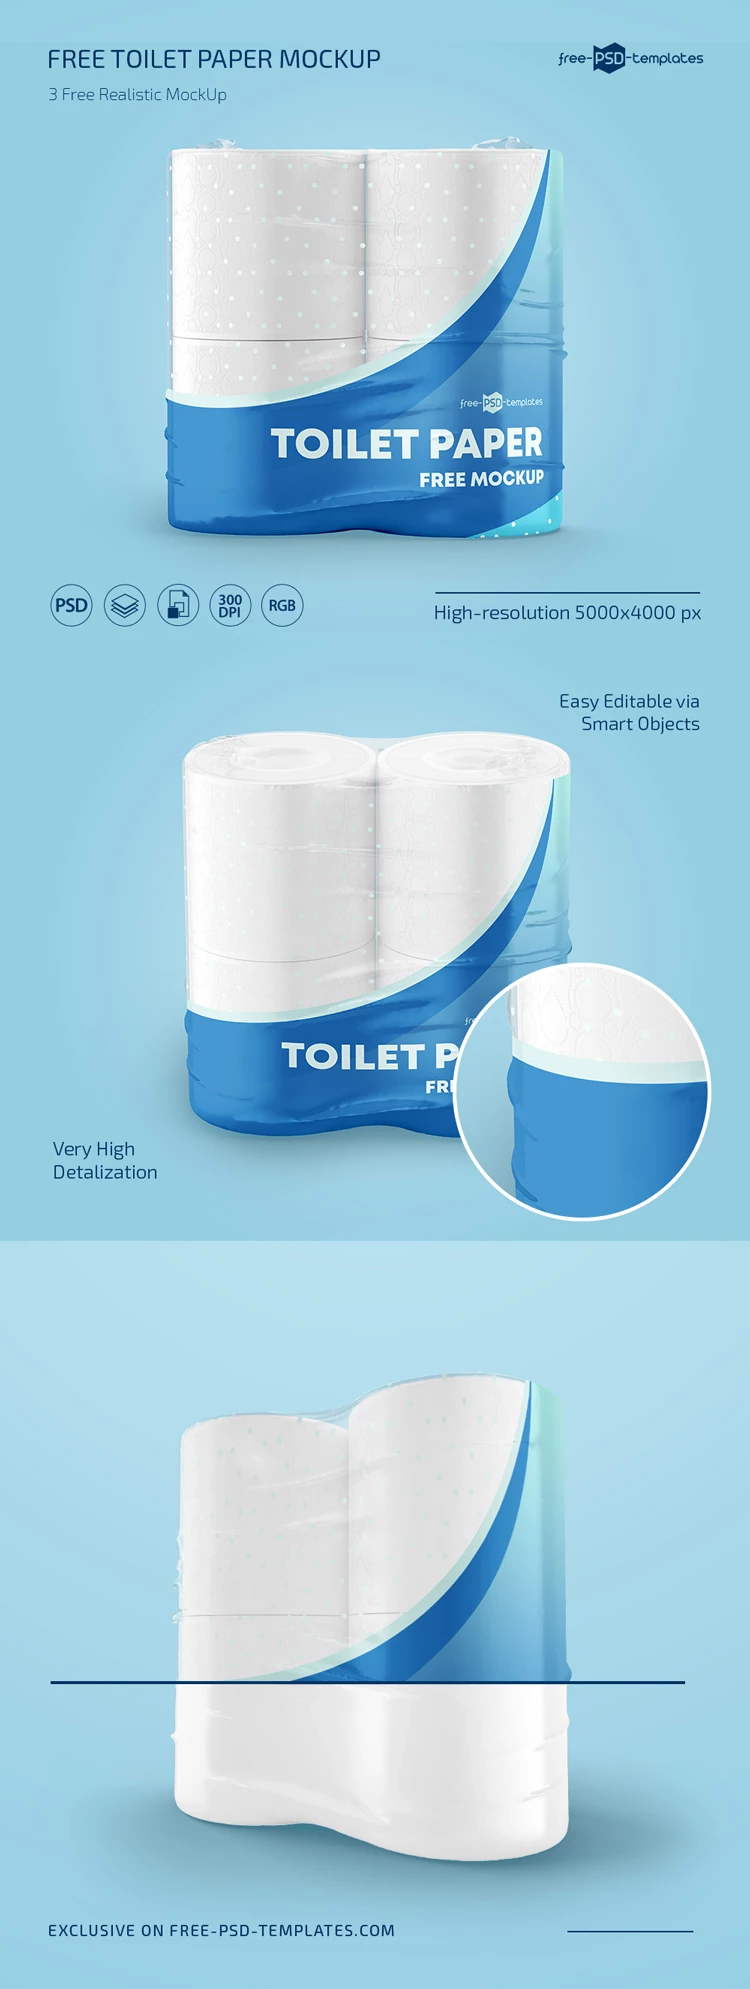 Free Toilet Paper Mockup